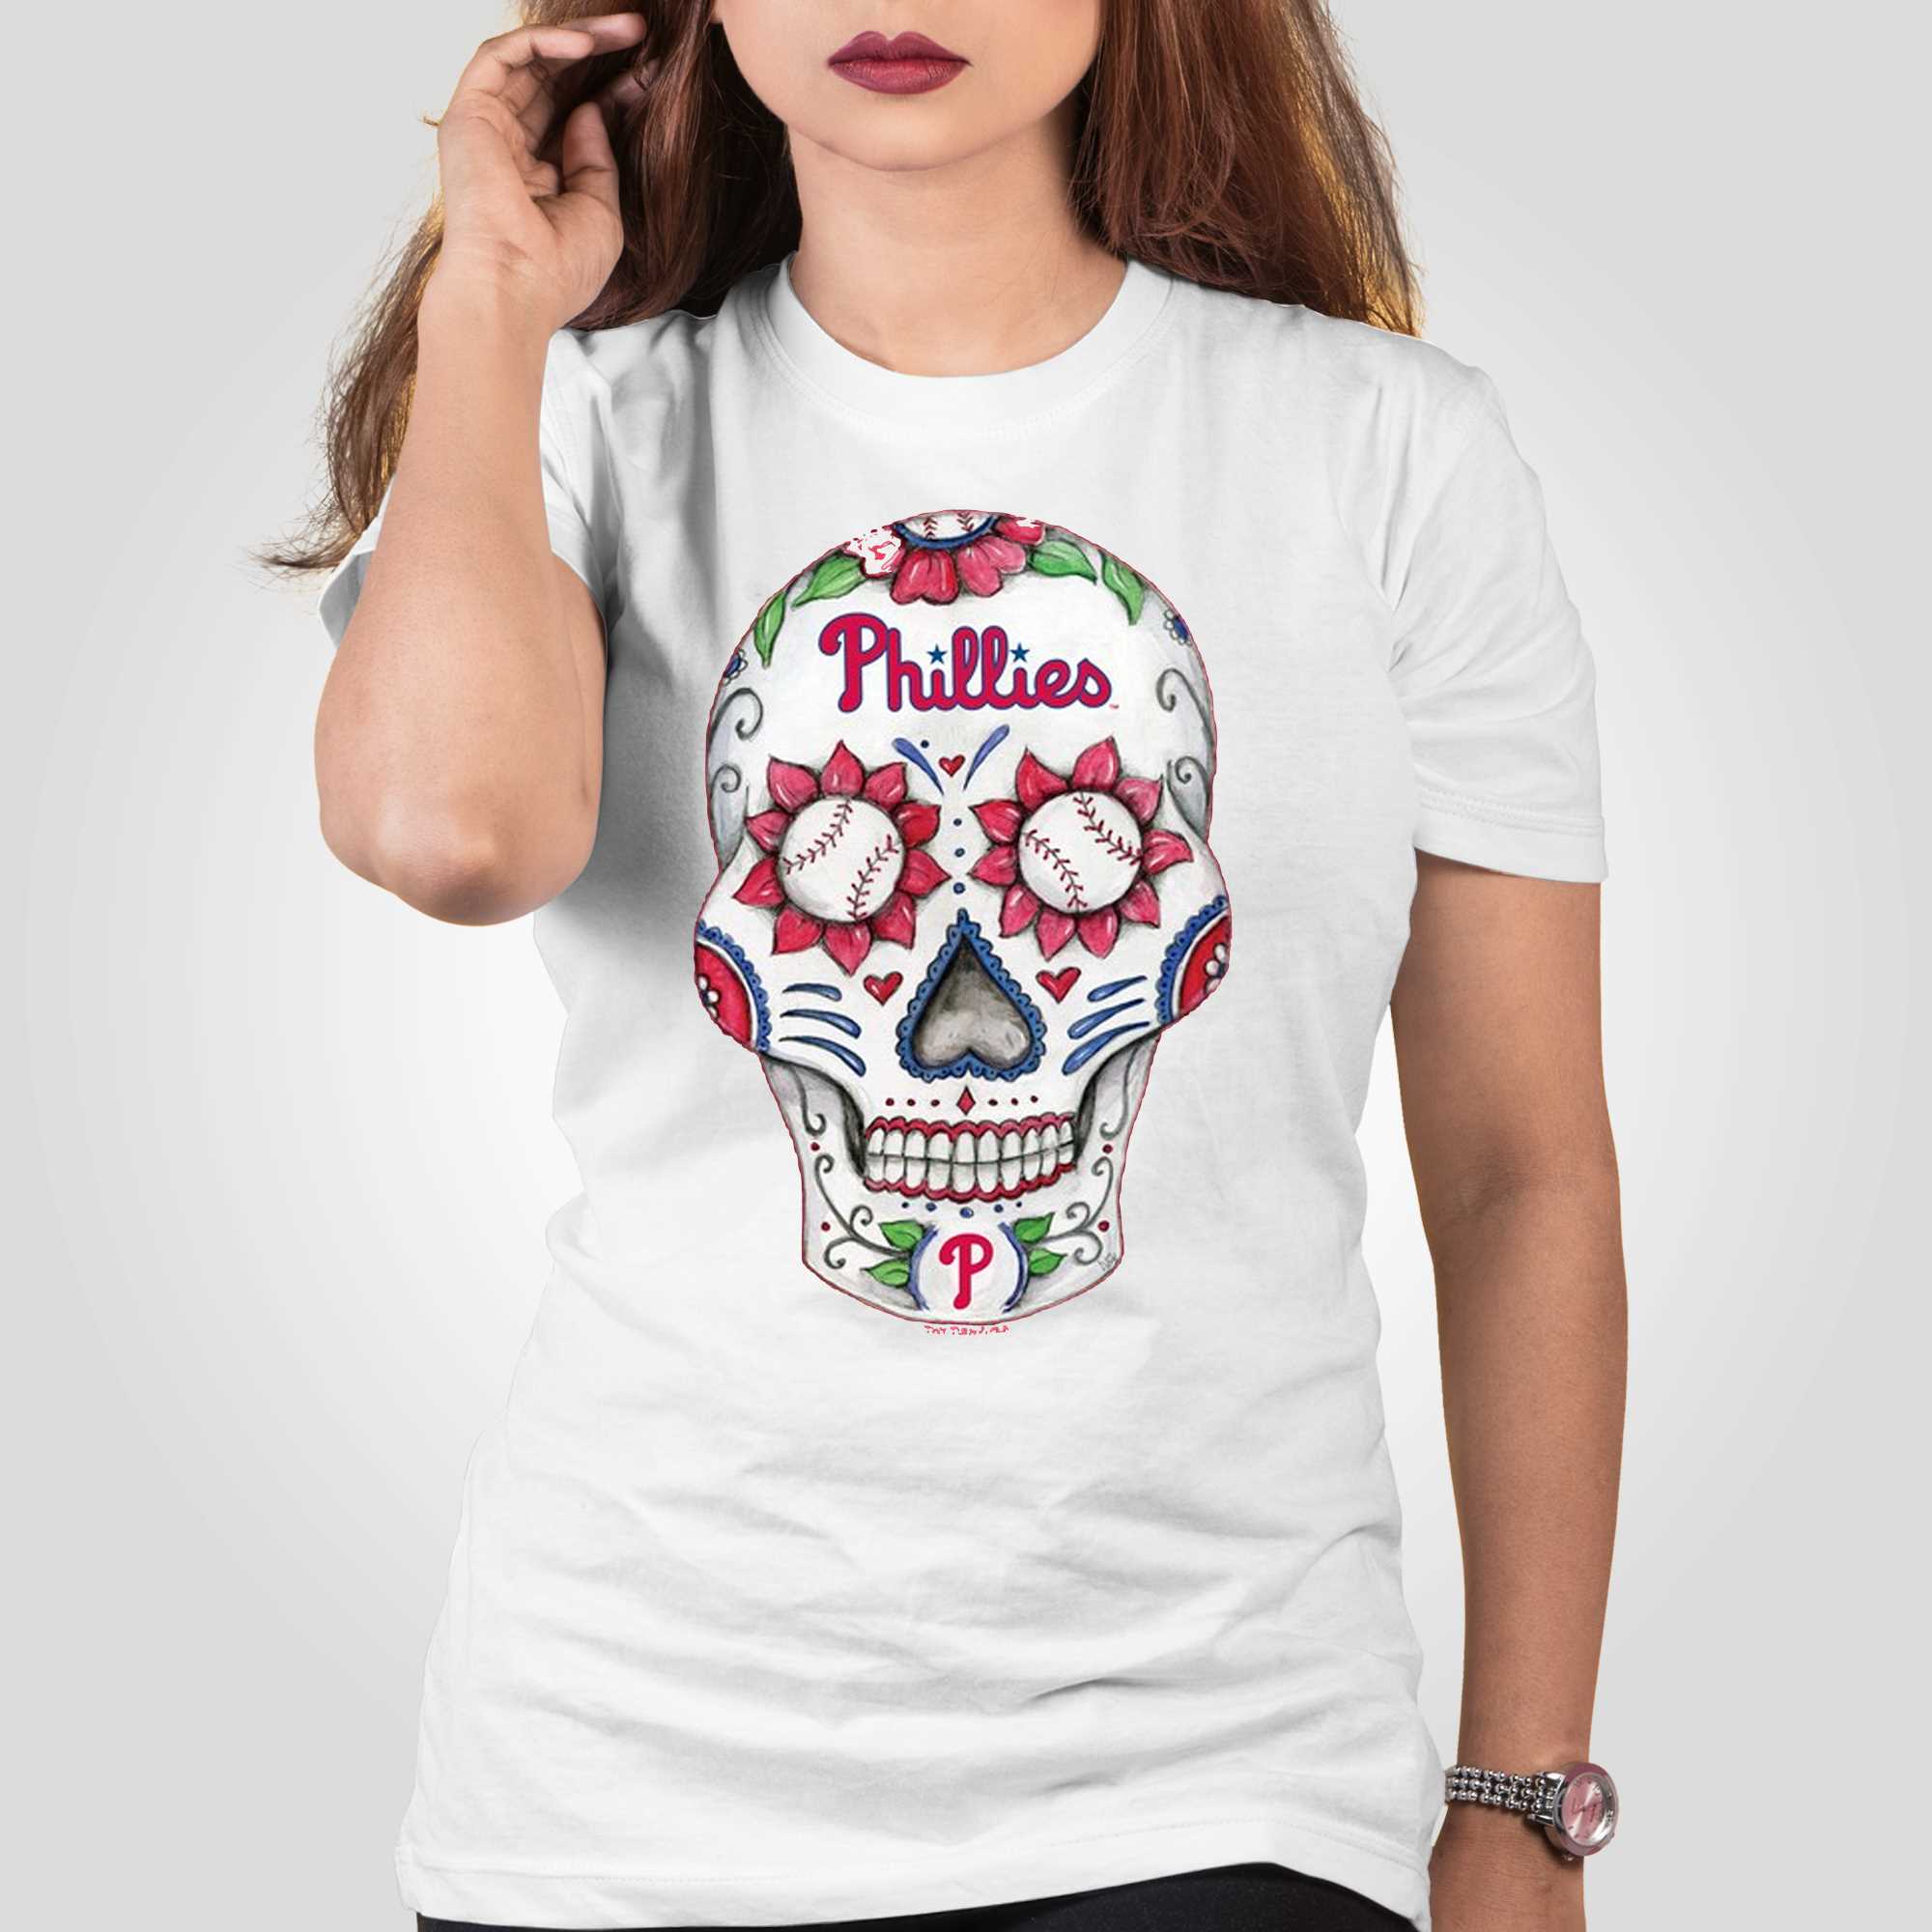 Grateful Dead Shirt W A Skull On It Tie Dye Band Shirt - Shibtee Clothing